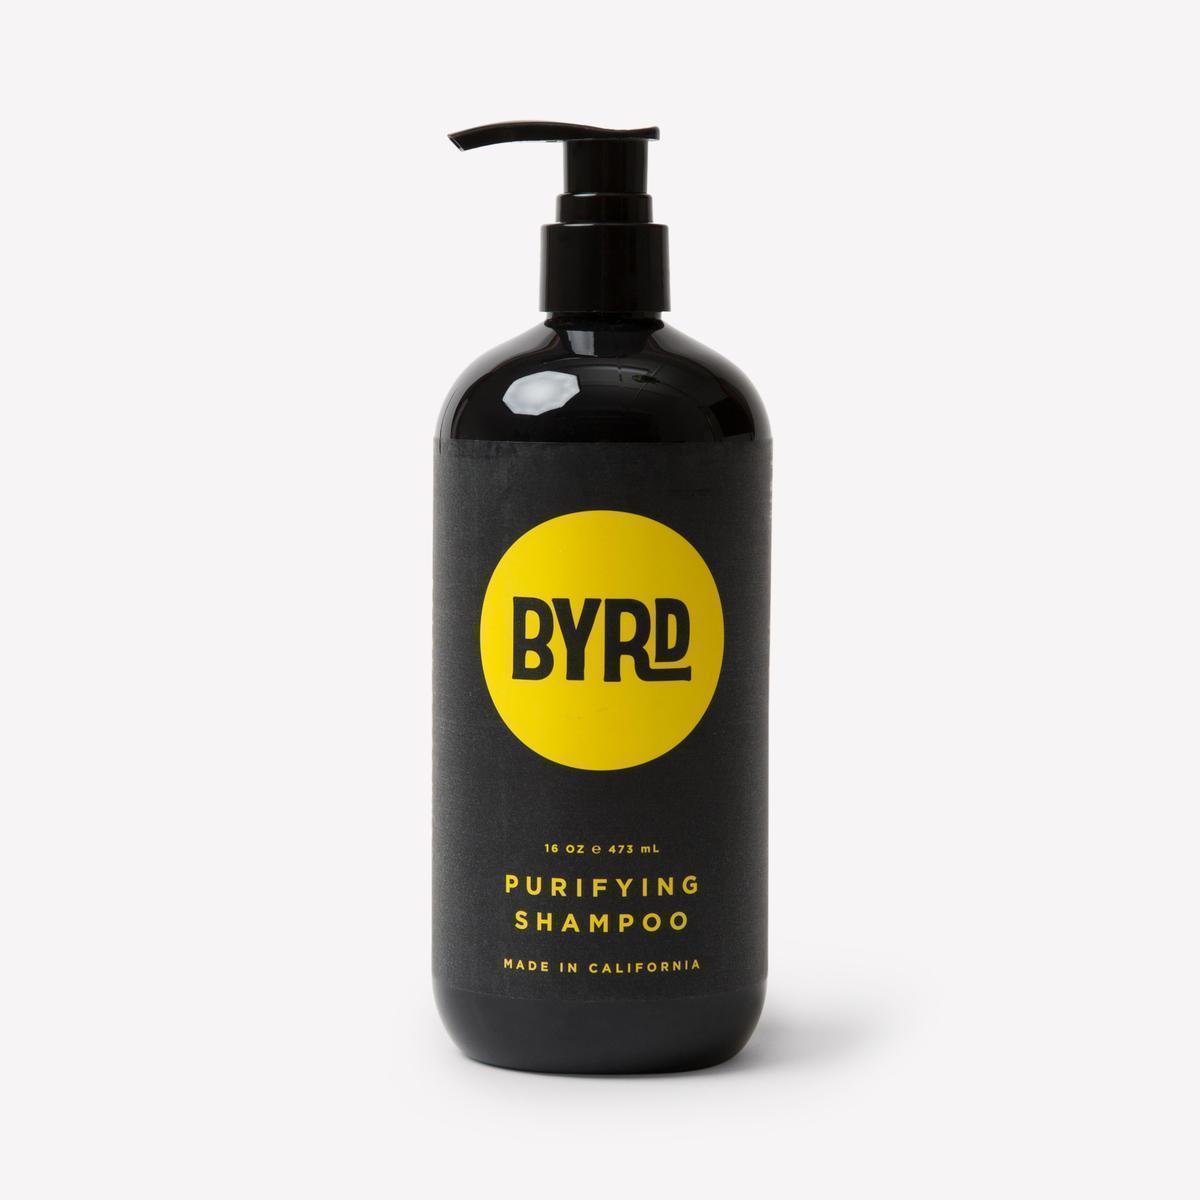 BYRD Purifying Shampoo 473ml-The Pomade Shop